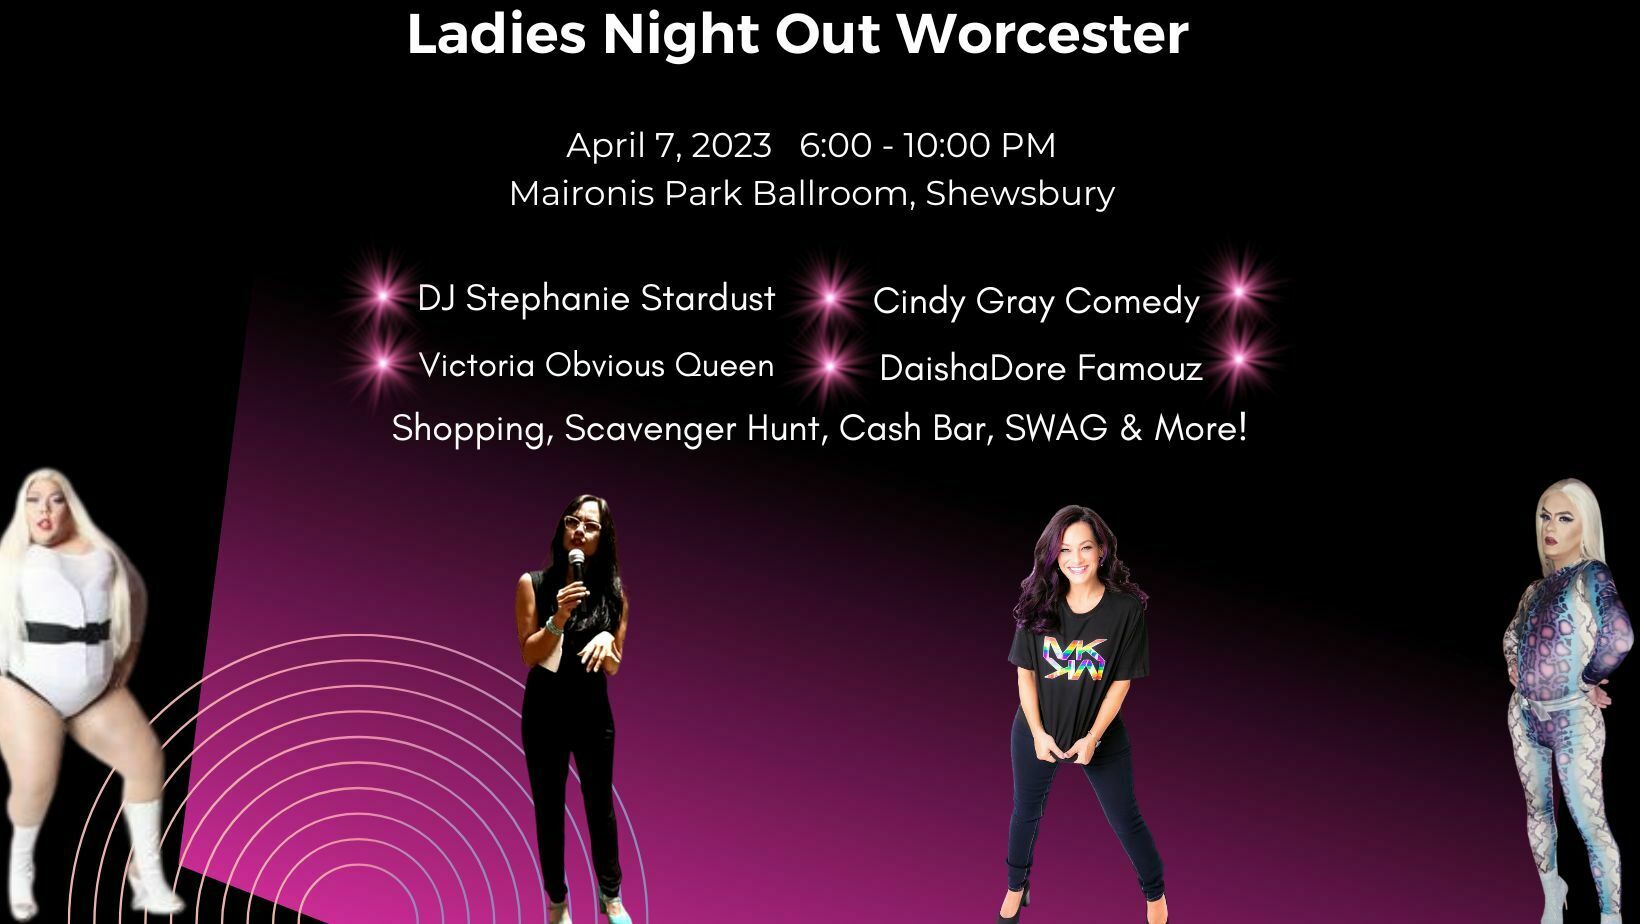 Ladies Night Out Worcester, Shrewsbury, Massachusetts, United States